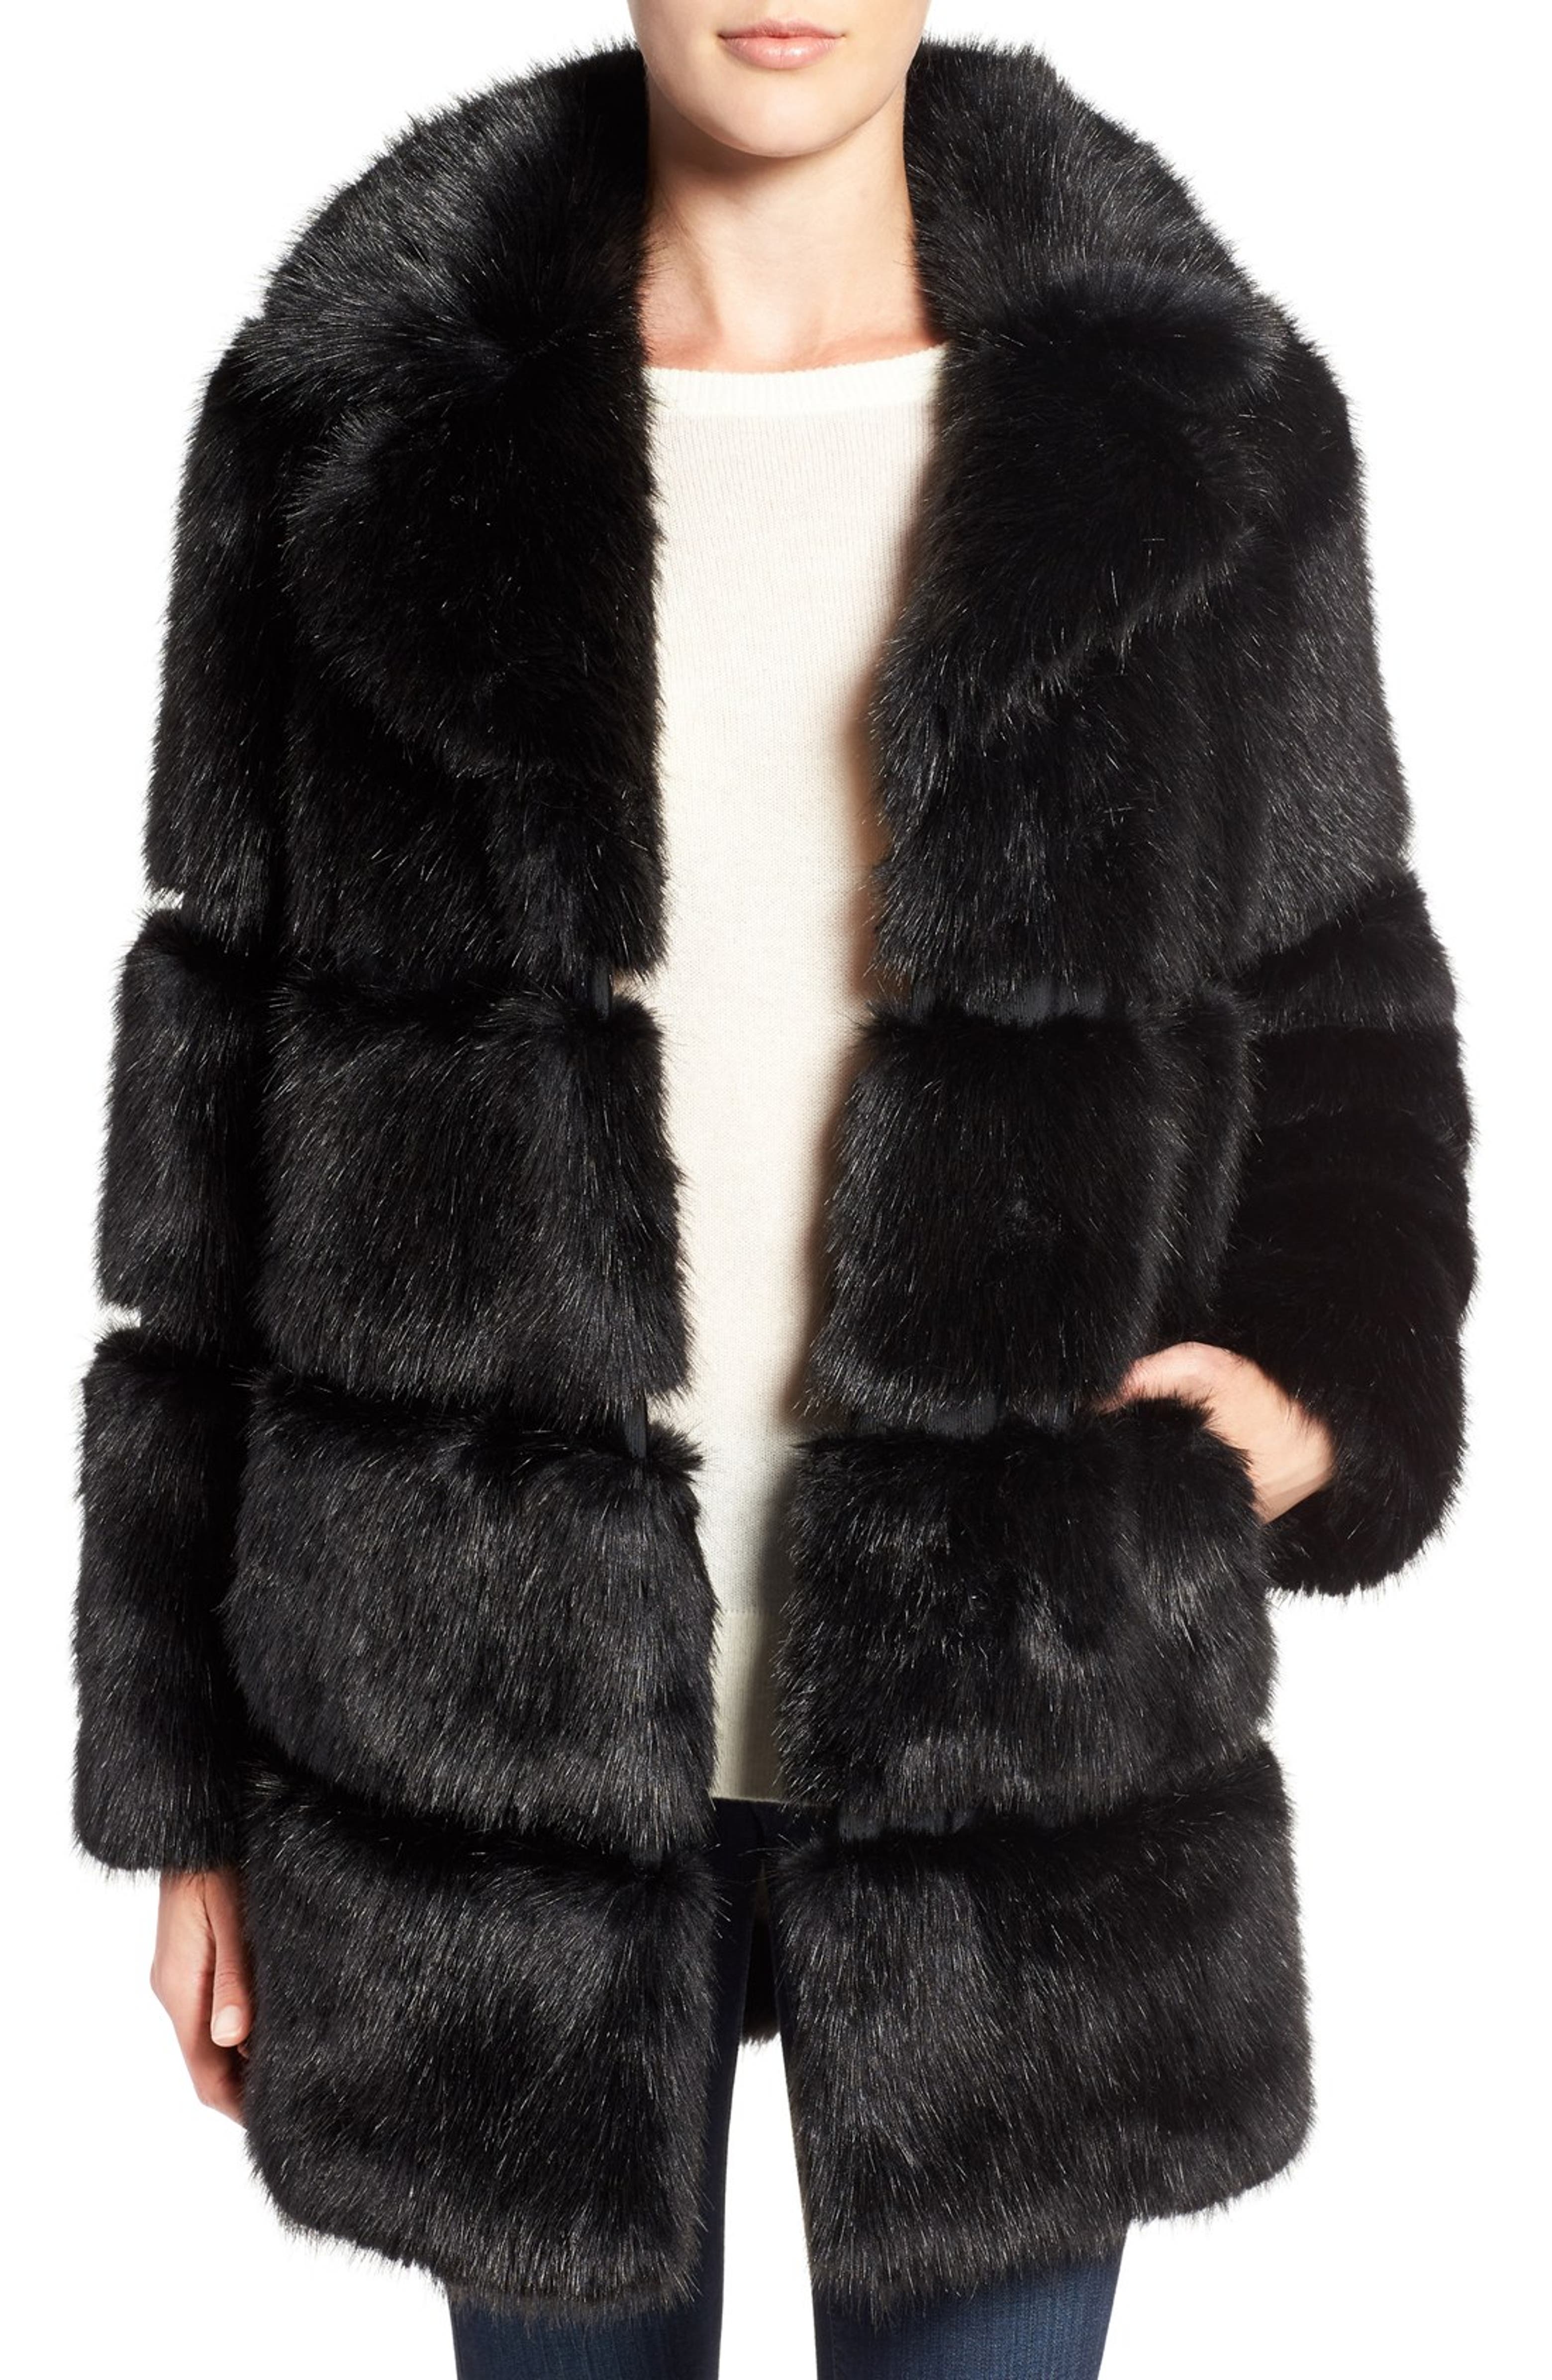 kate spade new york grooved faux fur coat | Nordstrom